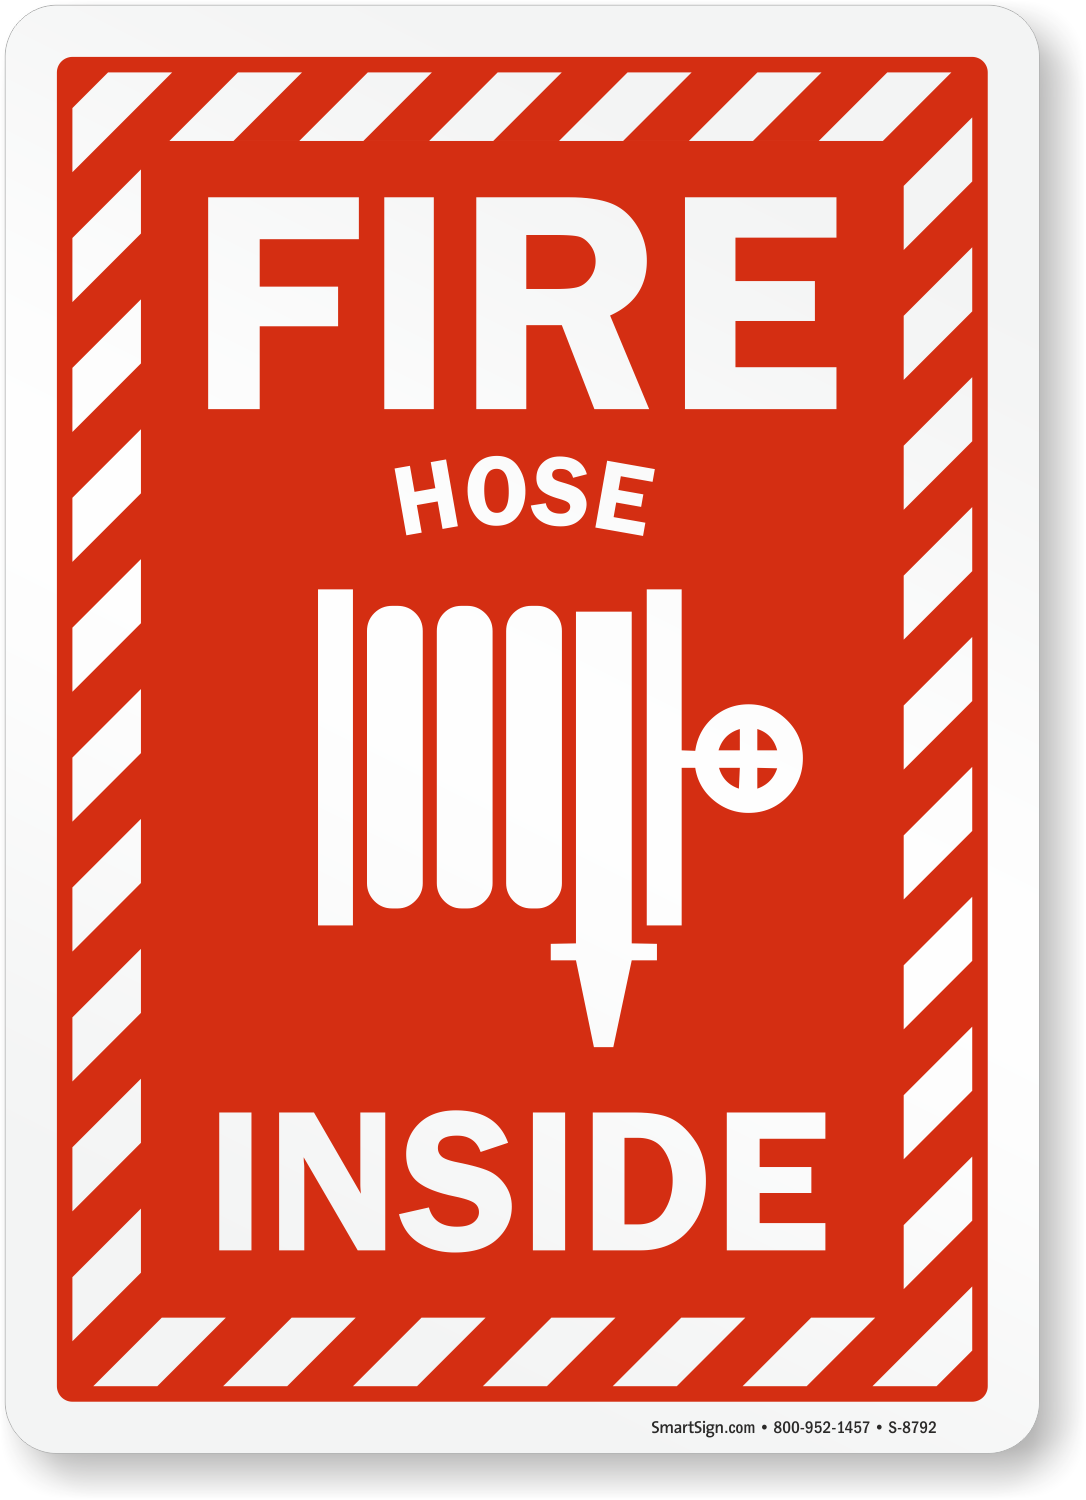 https://www.mysafetysign.com/img/lg/S/fire-hose-inside-sign-s-8792.png